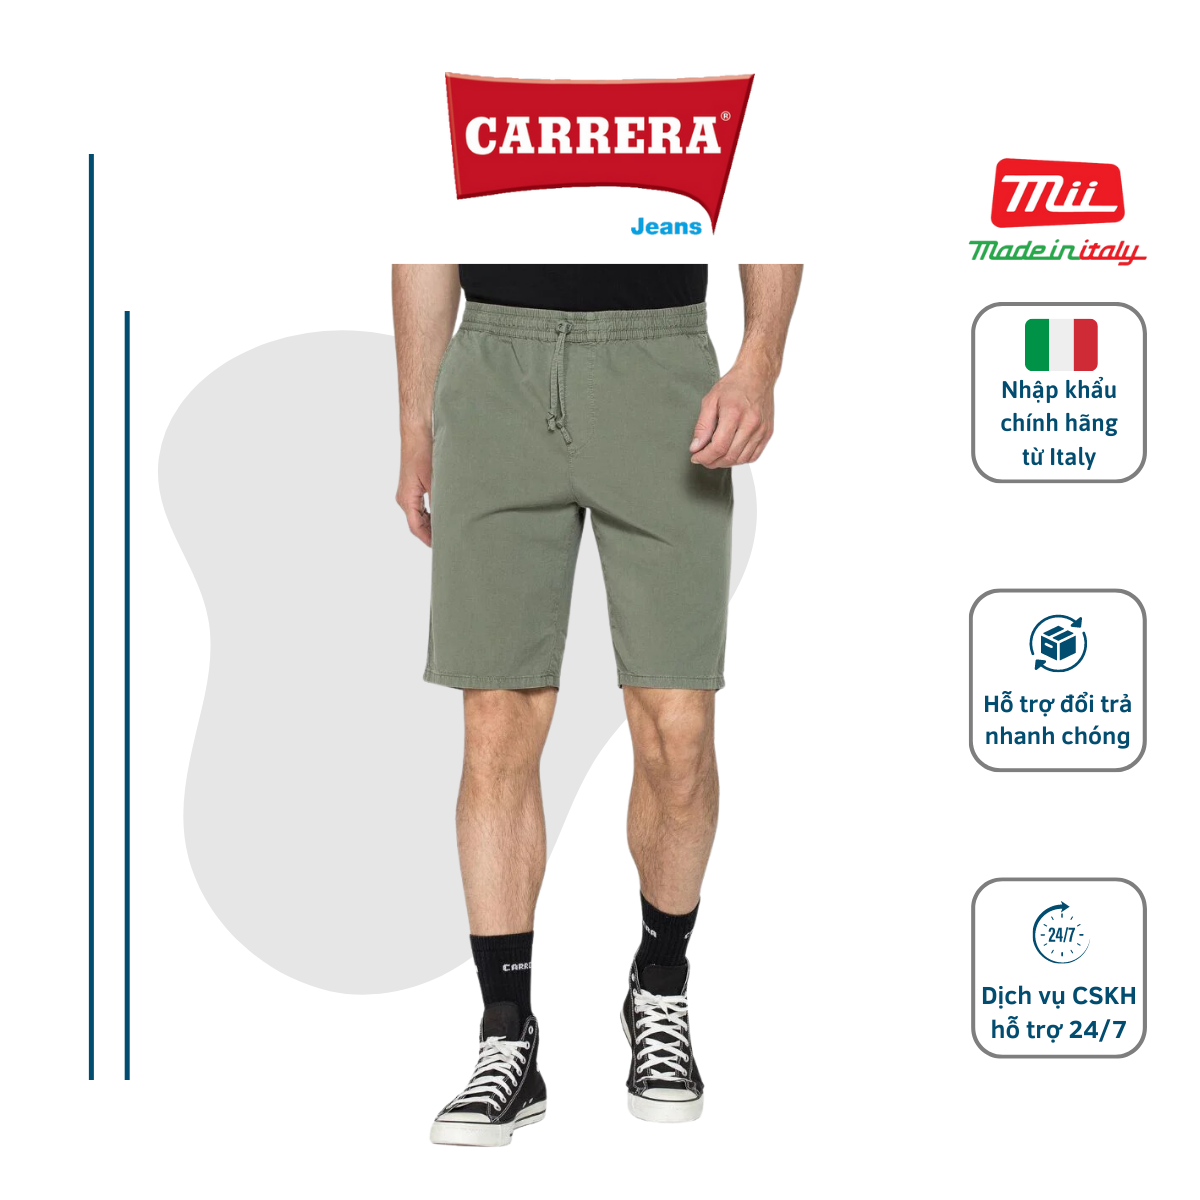 Carrera men s jeans imported genuine Italian basic style elastic shorts